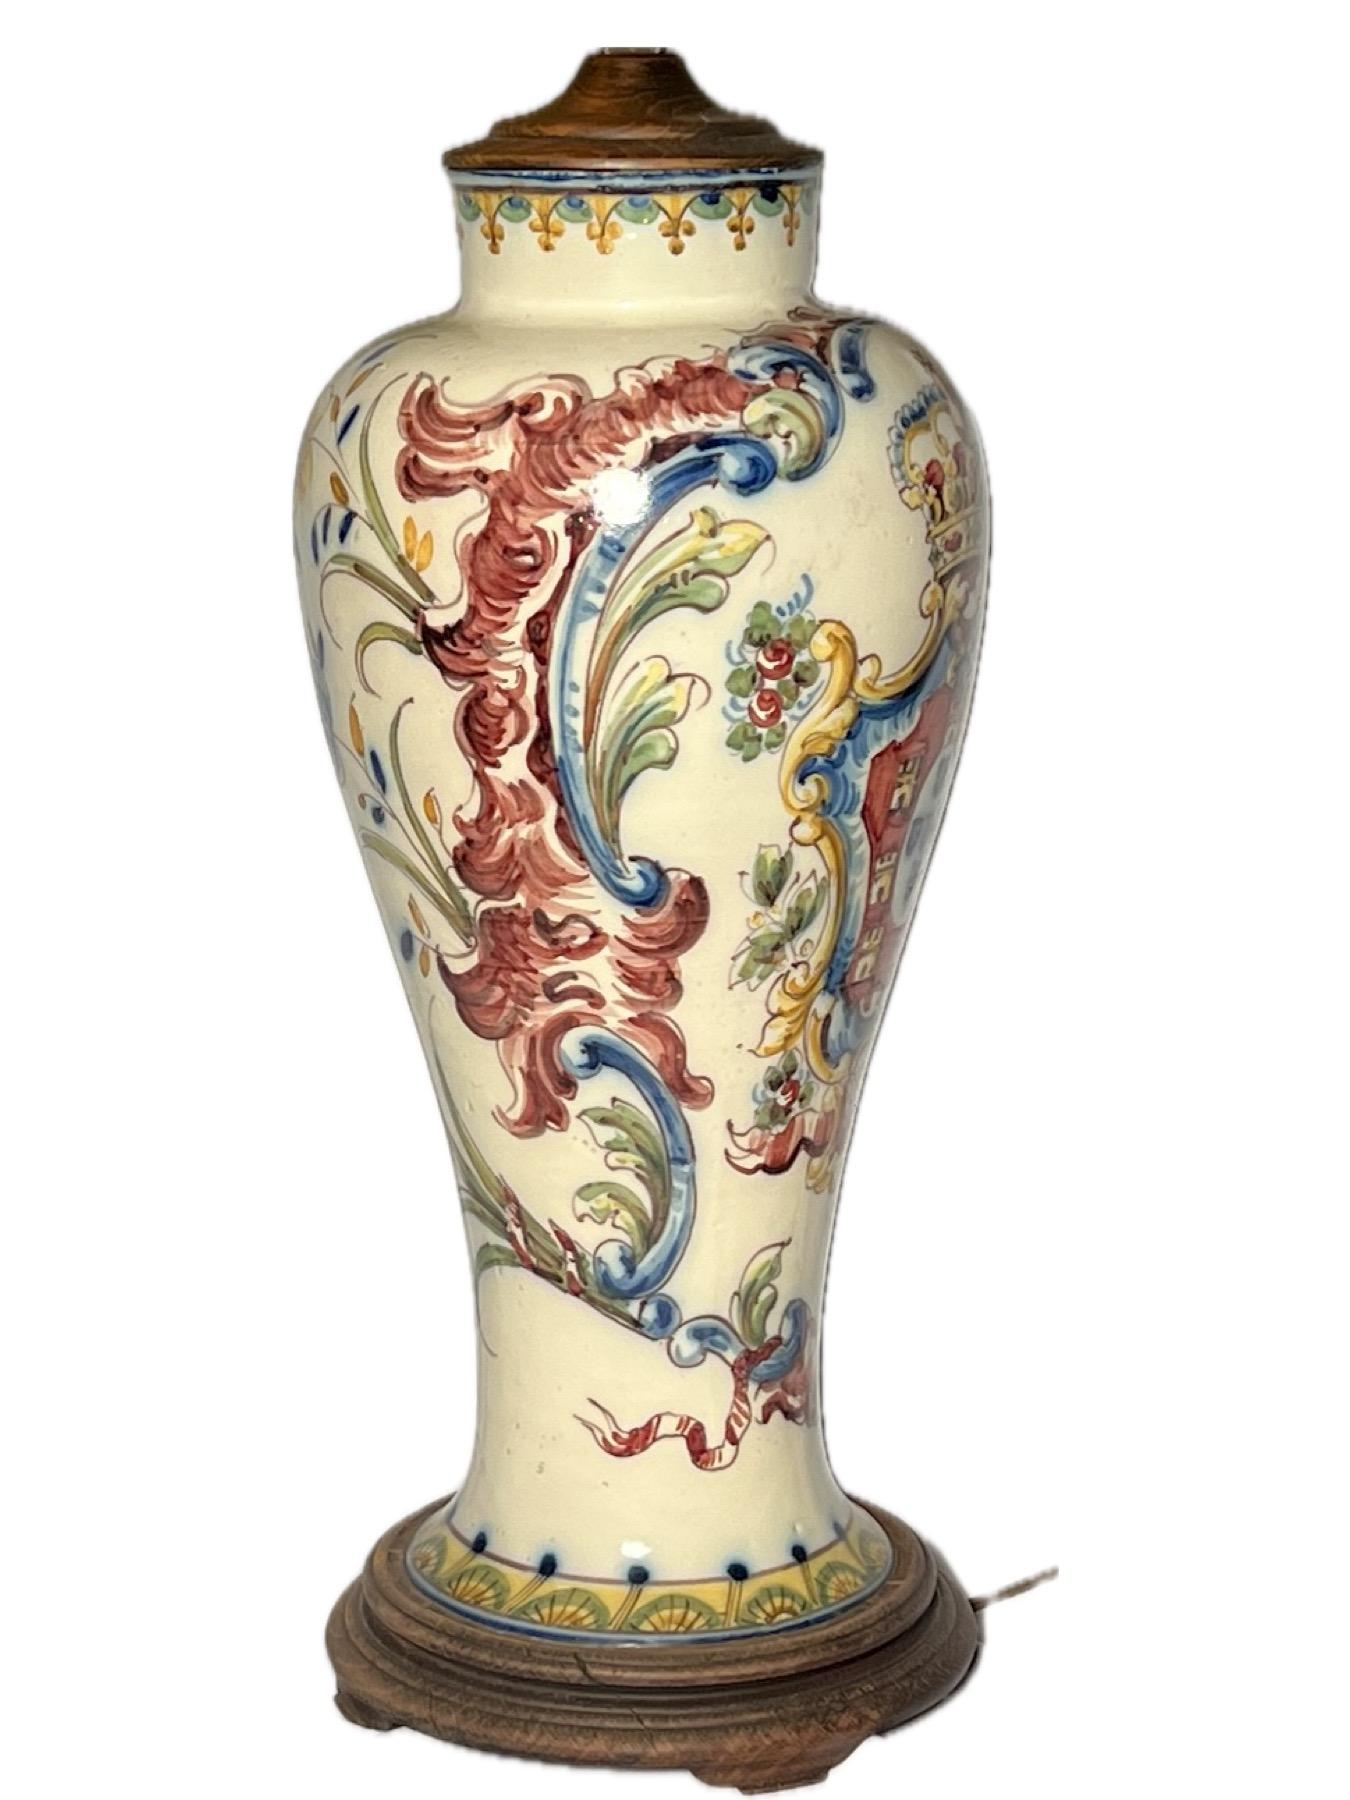 Antique Italian Faience Majolica Porcelain Vase Converted into a Lamp, Circa 1880.